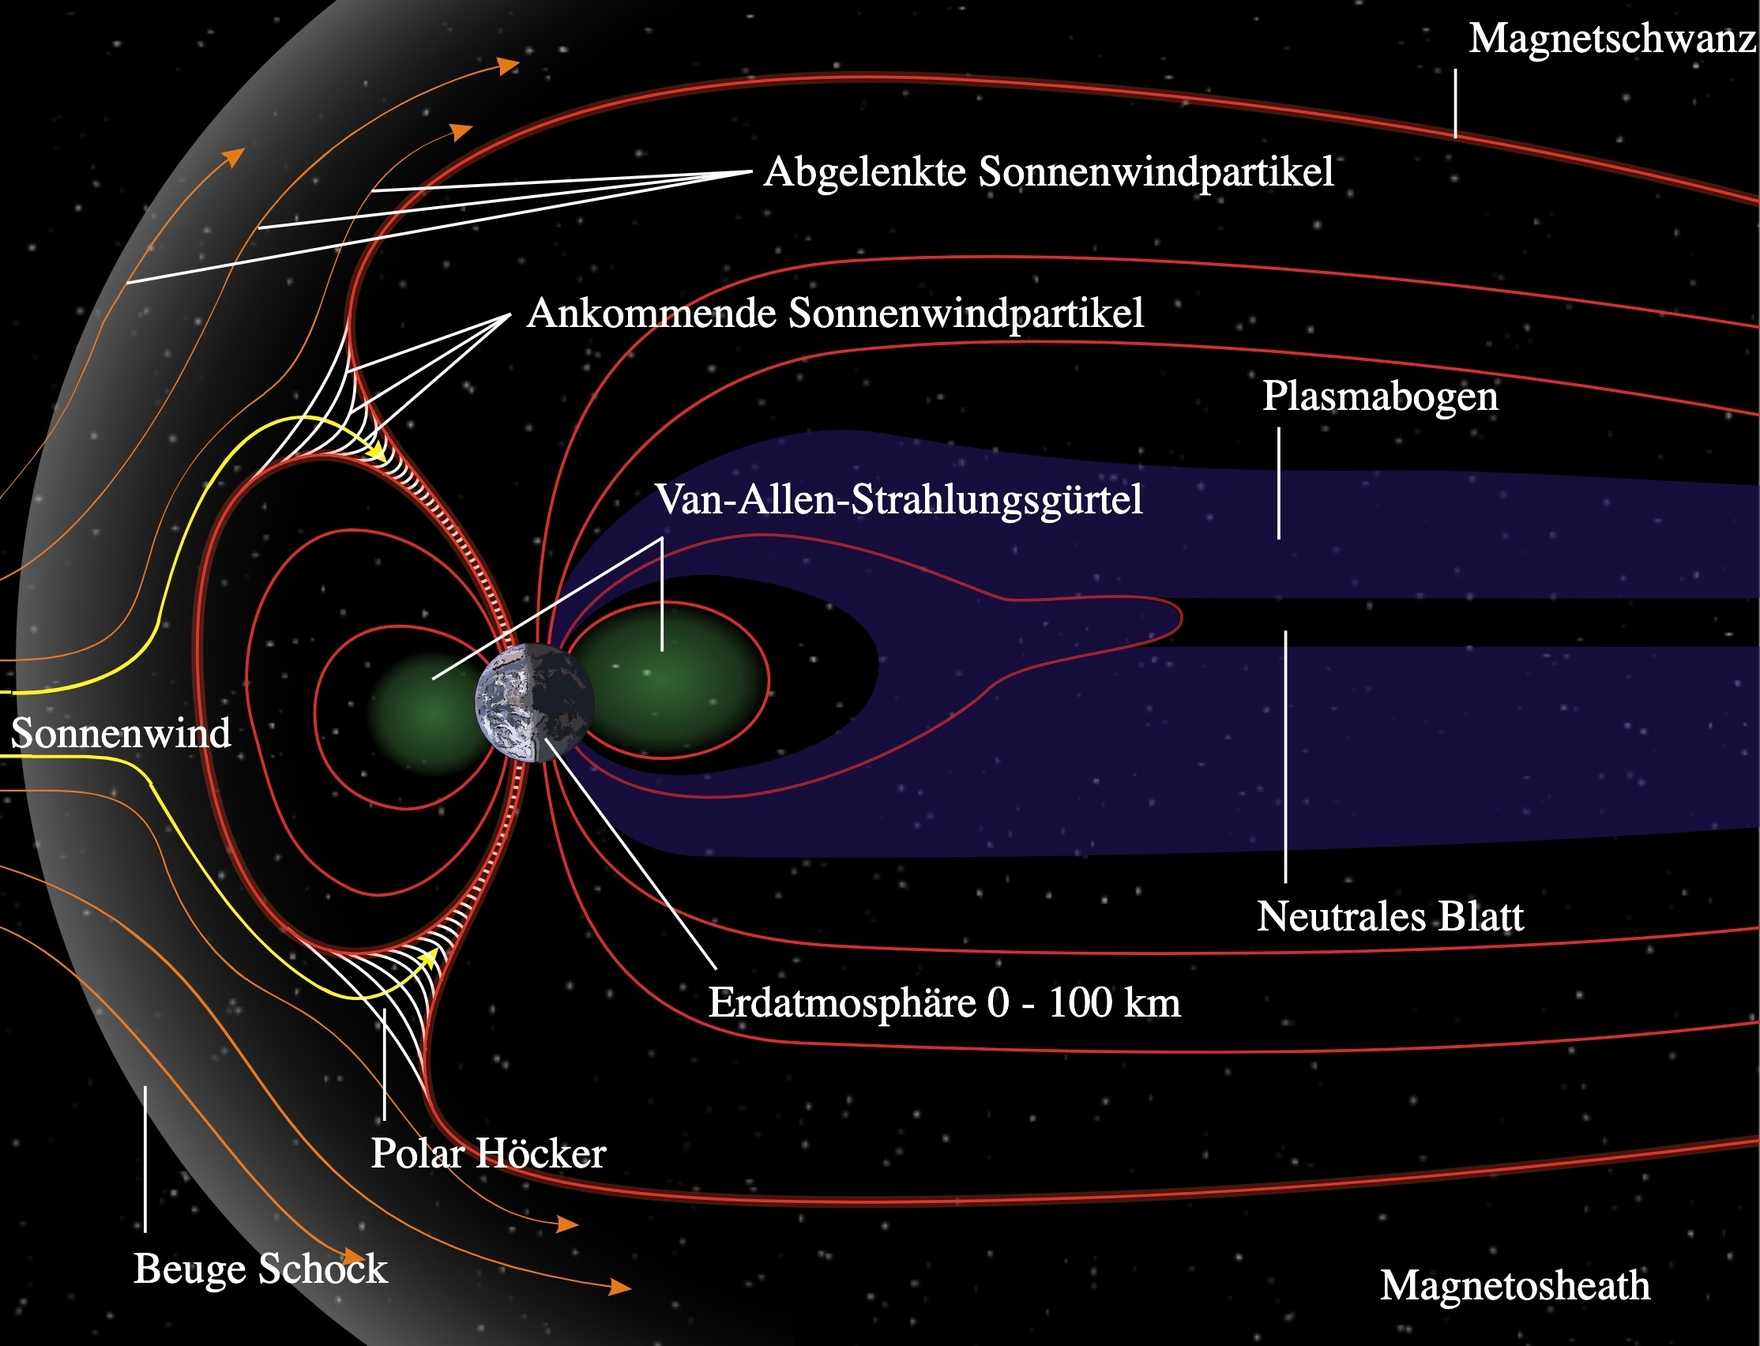 Dünya'nın manyetosferinin şeması.